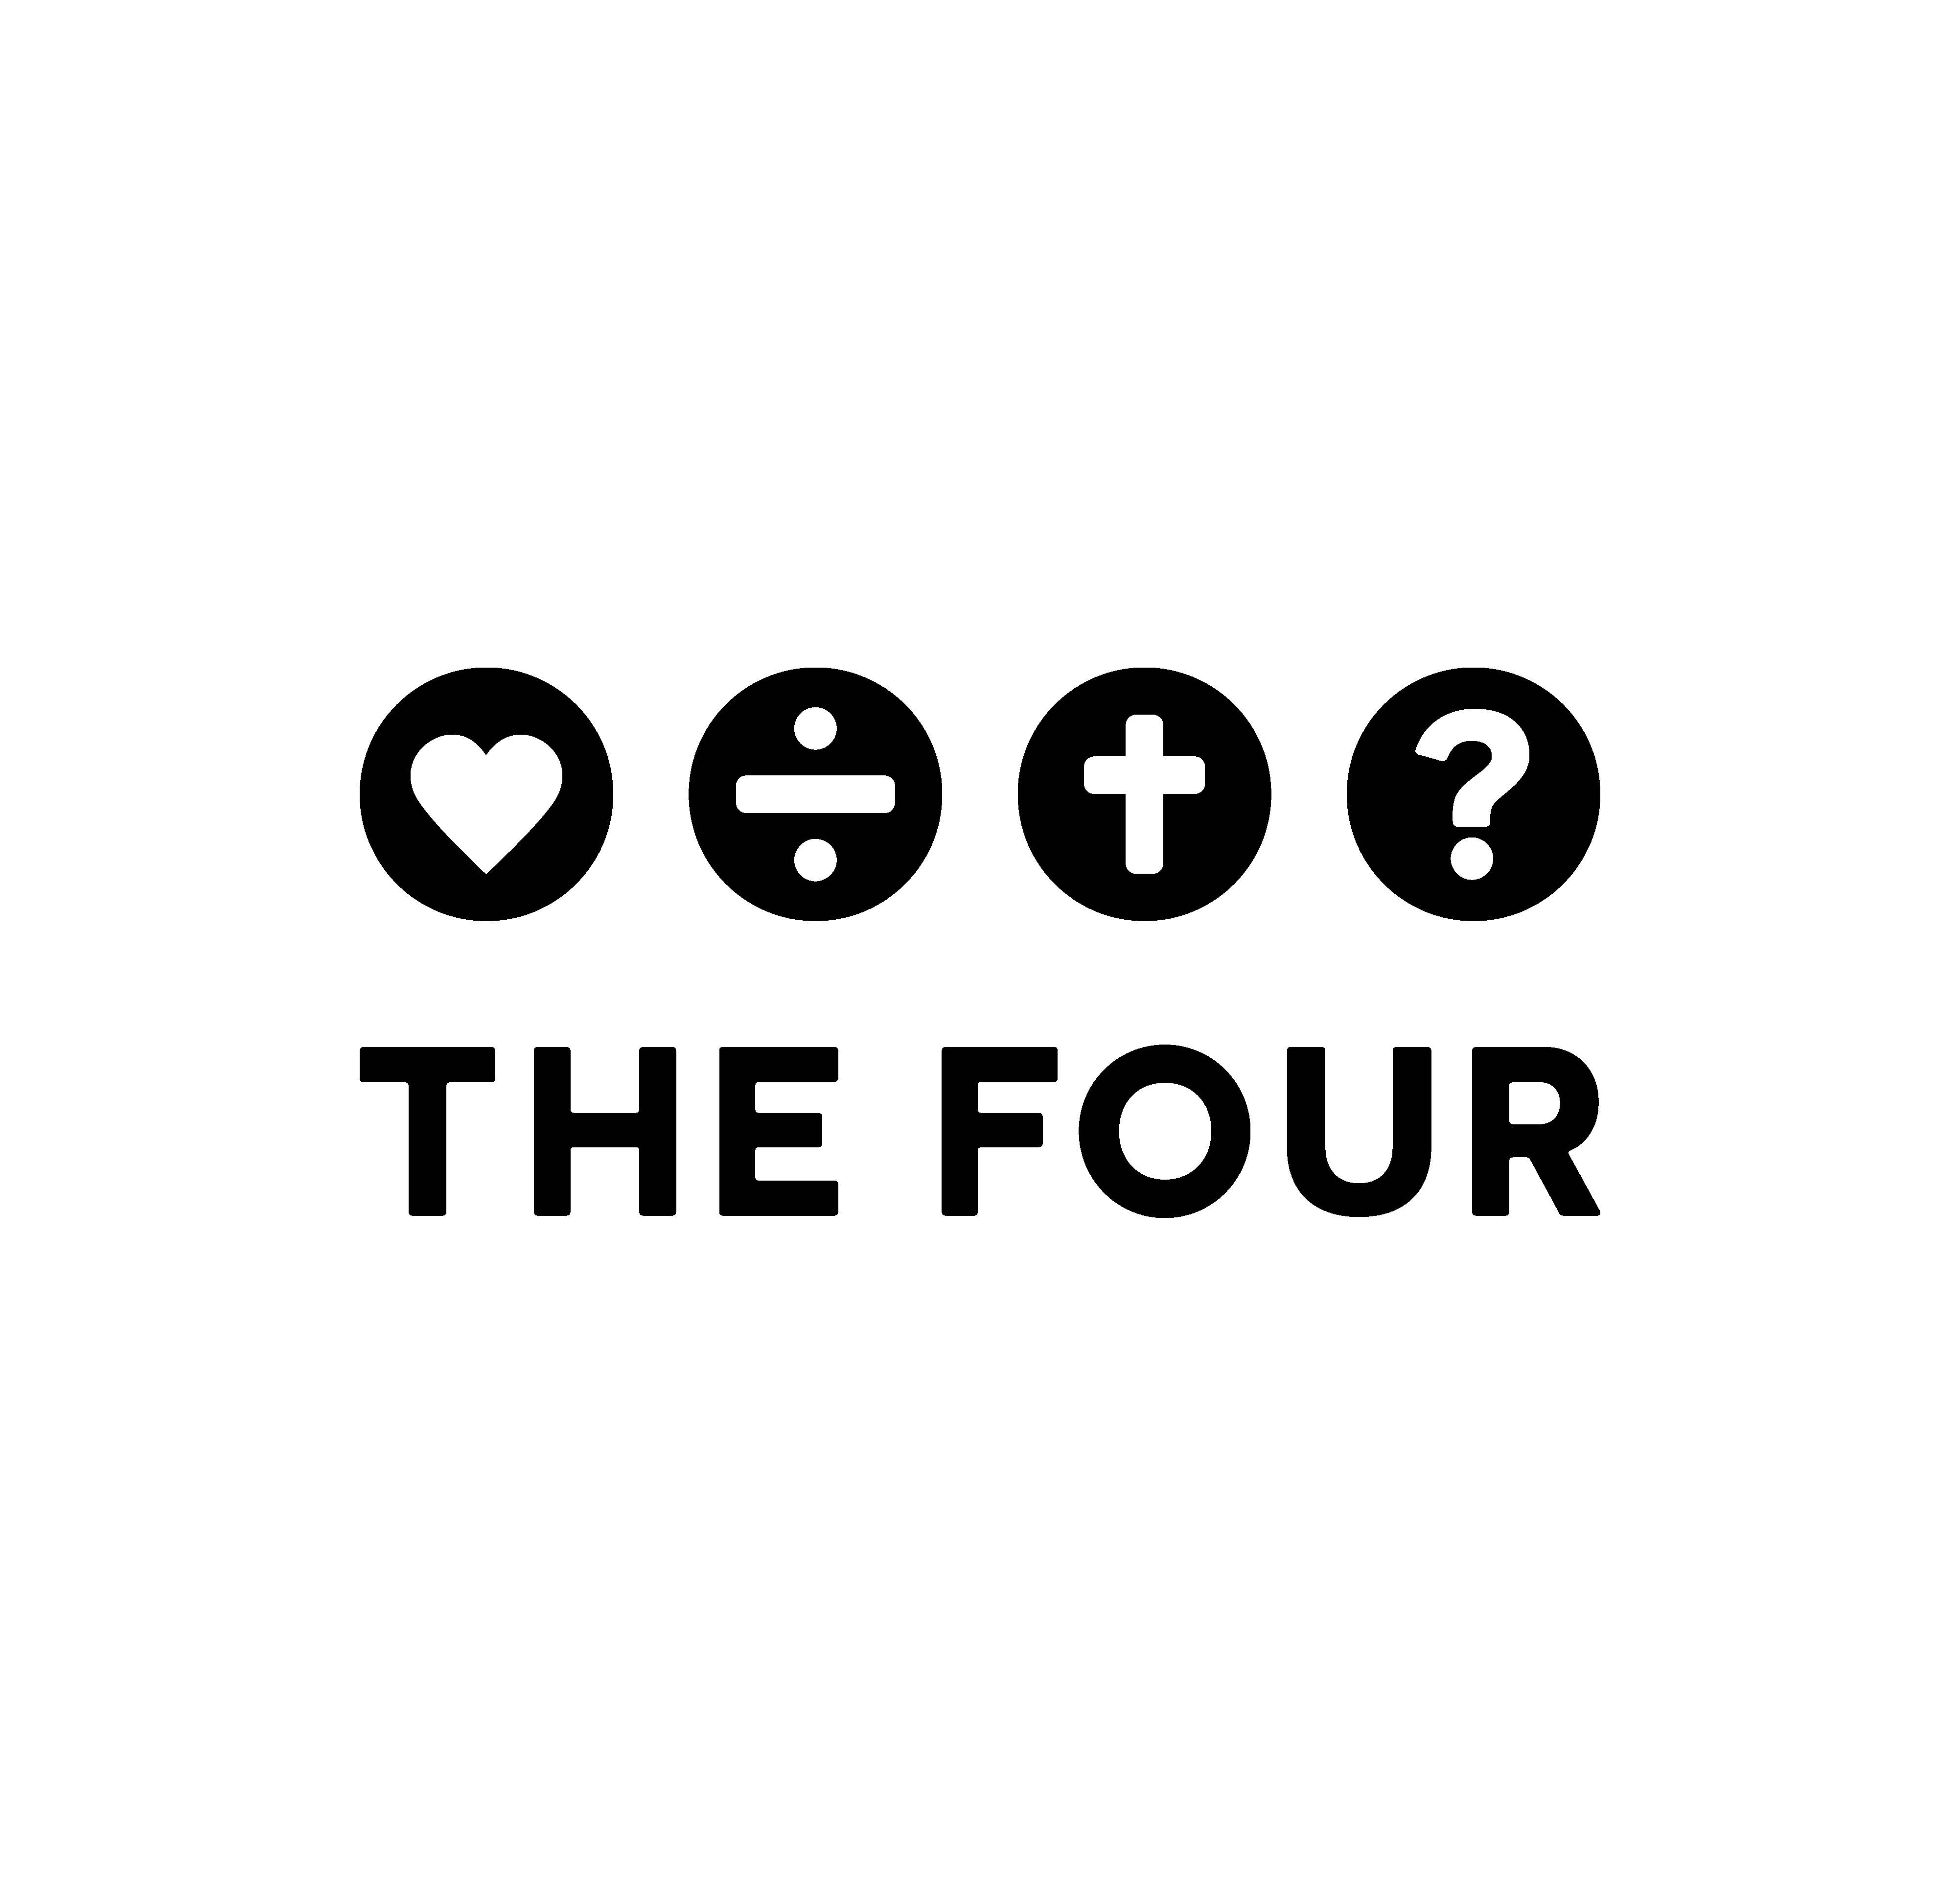 THE FOUR